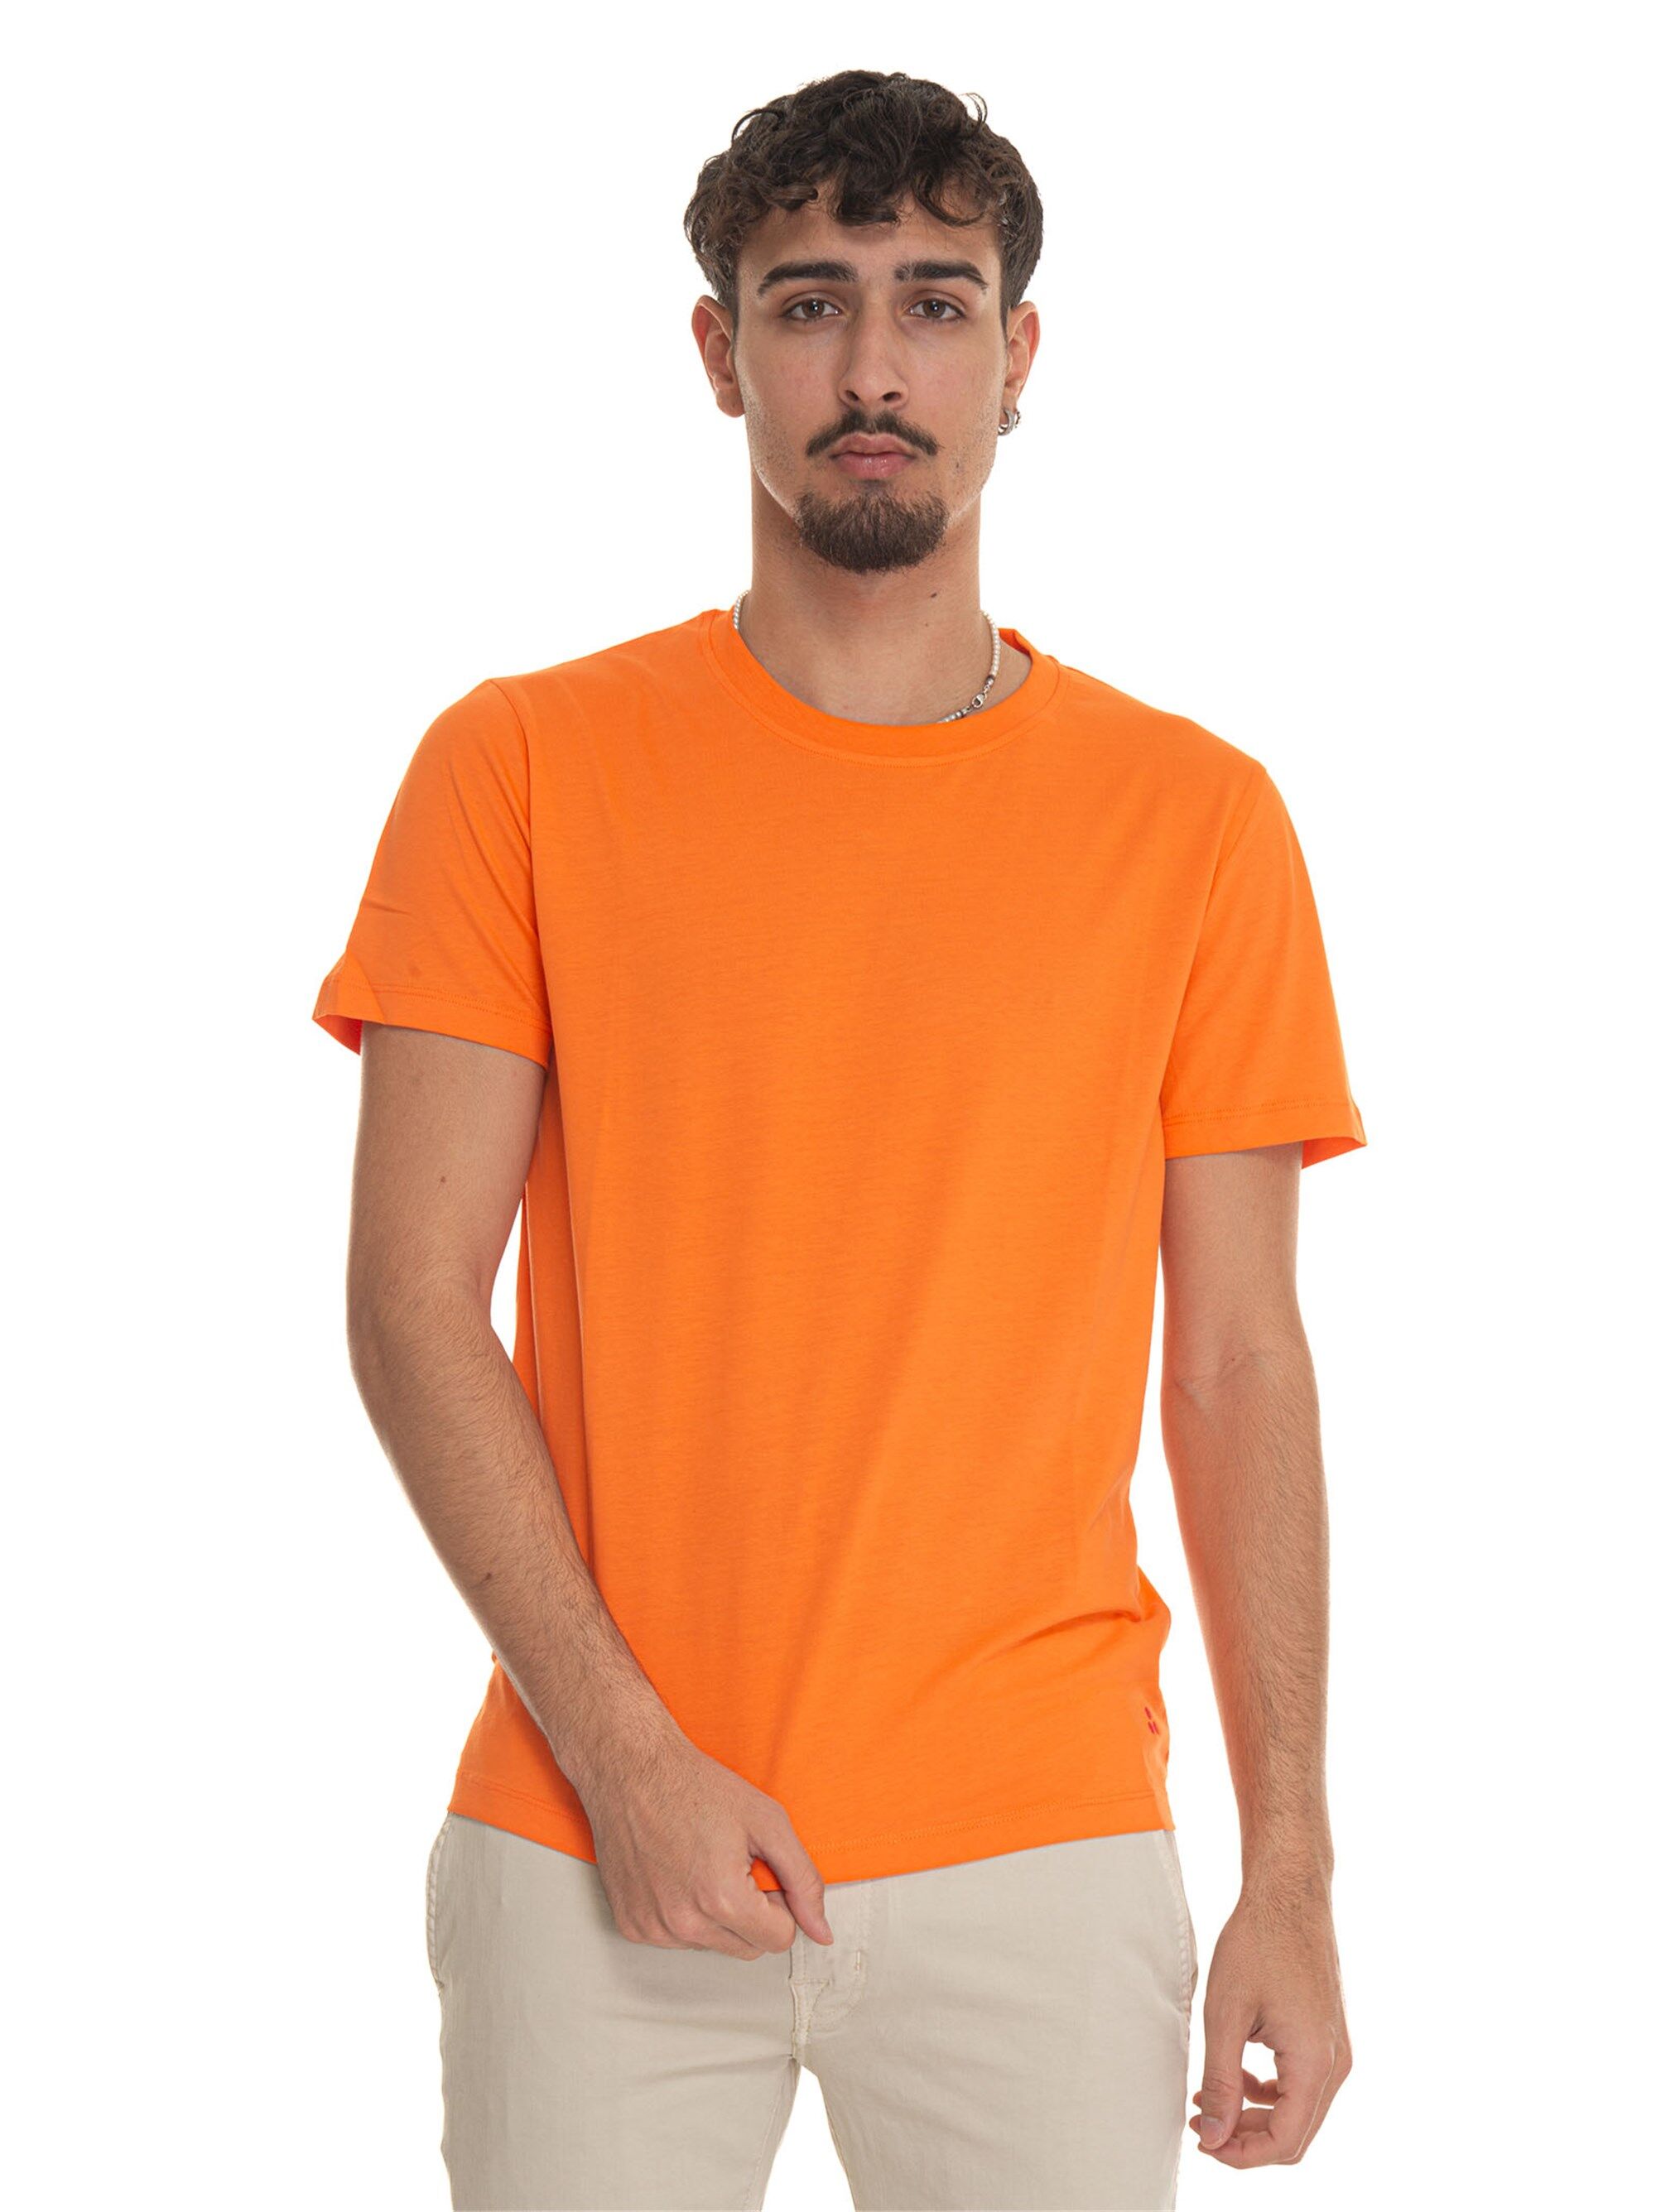 Peuterey T-shirt girocollo mezza manica MANDERLY01 Arancio Uomo XXL